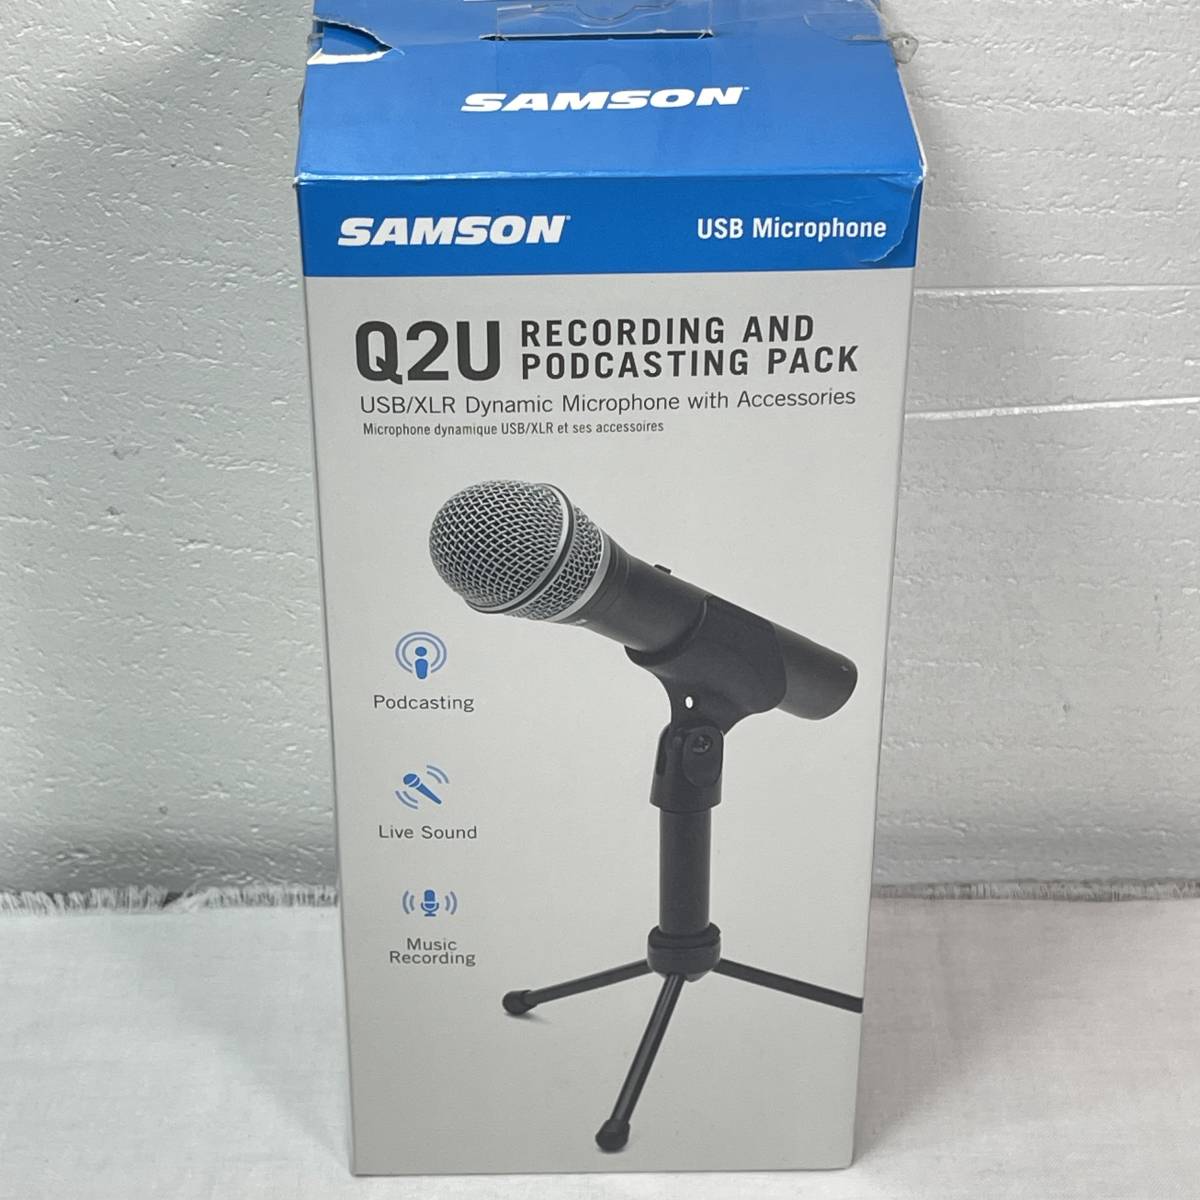 SAMSON Q2U USB Microphone RECORDING AND PODCASTING PACK マイク 箱付き USED品 1円スタート_画像2